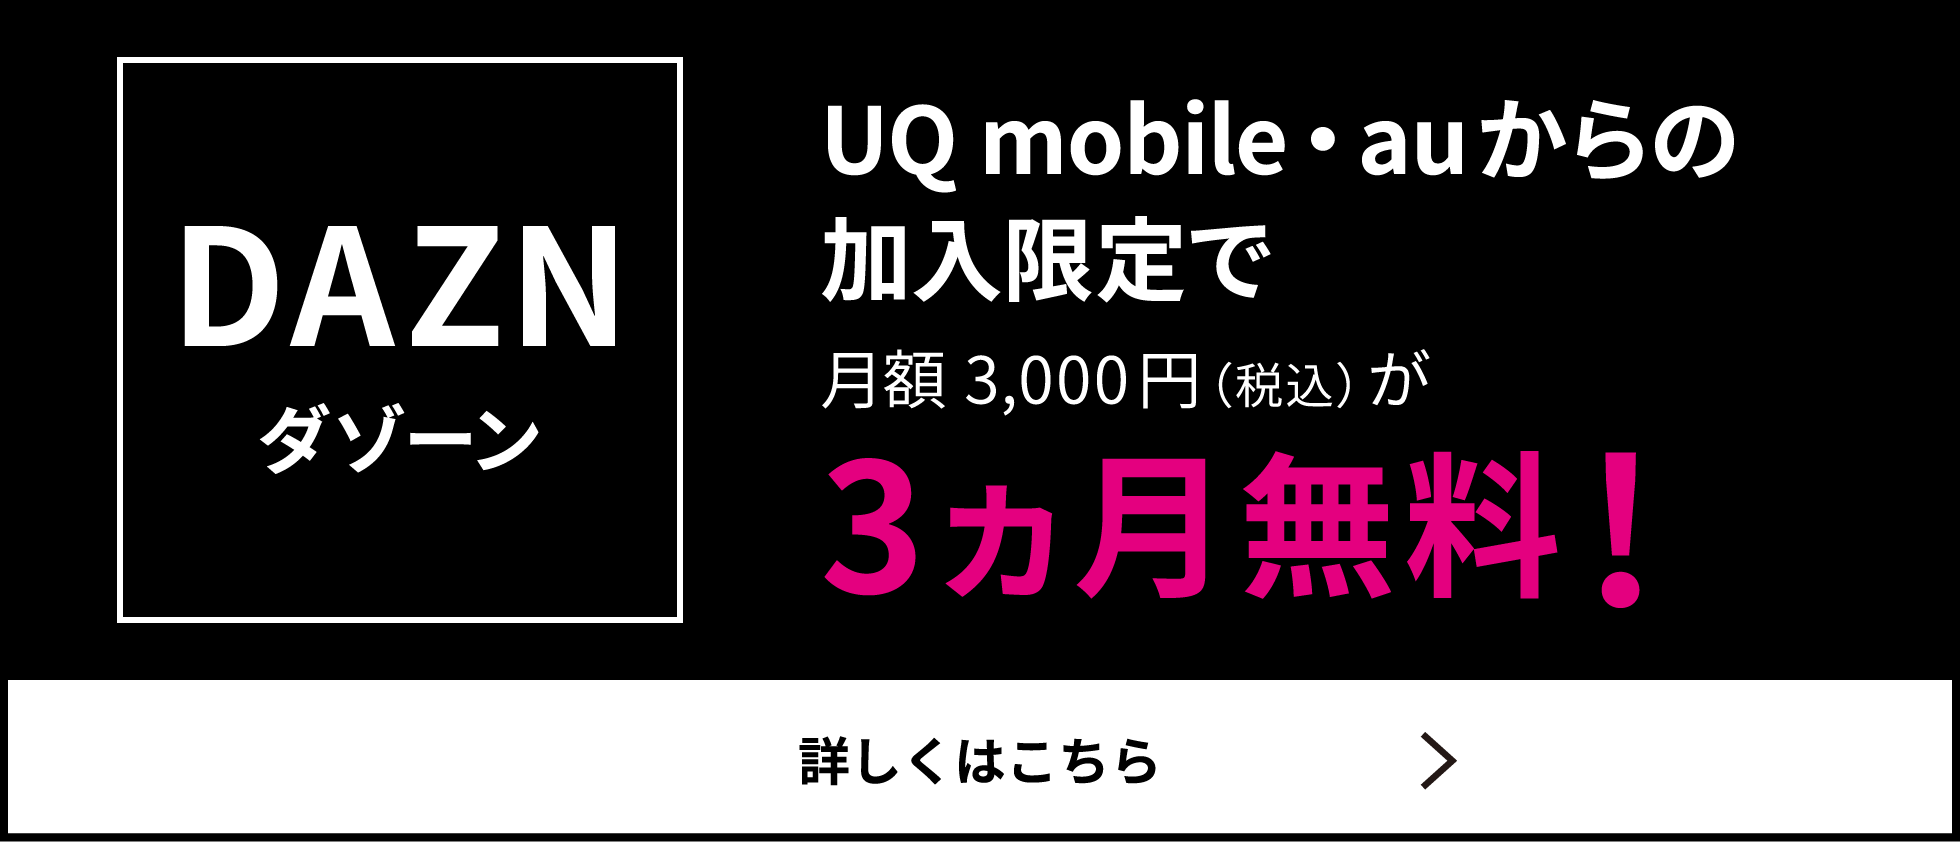 DAZN UQ mobile・auからの加入限定で月額 3,000円（税込）が3ヵ月無料！　詳しくはこちら